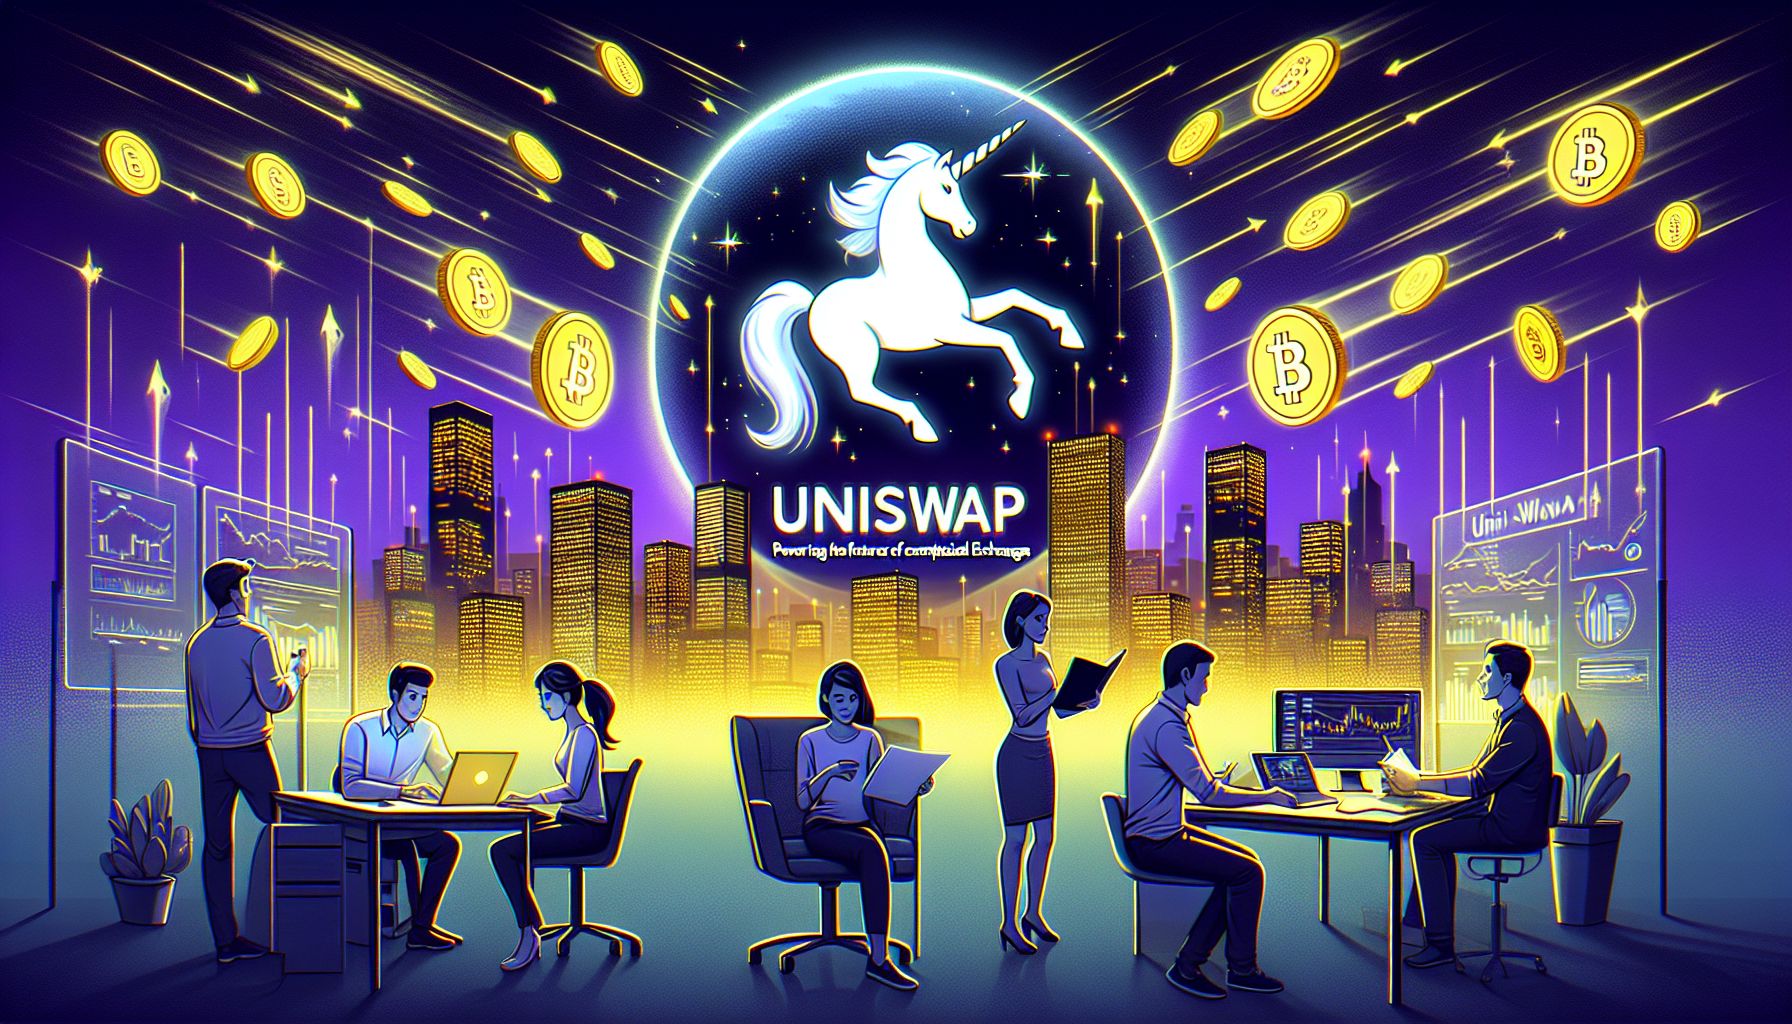 Uniswap: Powering the Future of Decentralized Exchanges